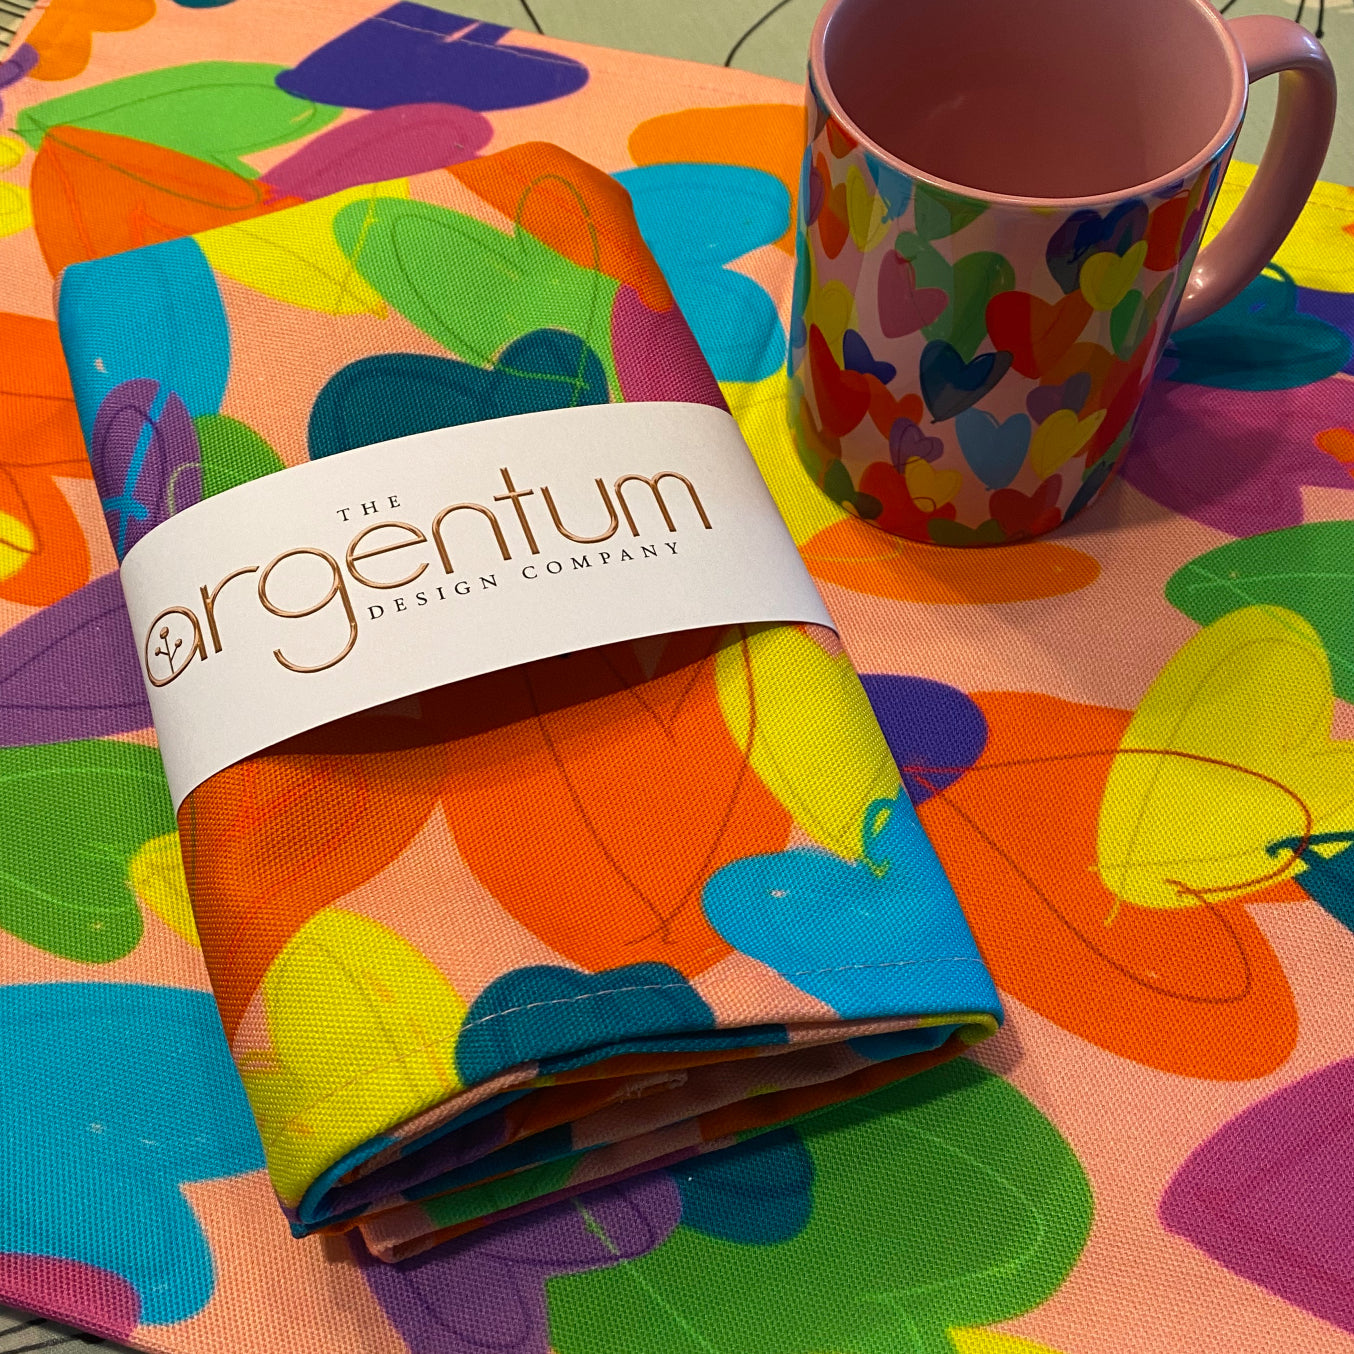 Rainbow Love Heart Tea Towel - The Argentum Design Co